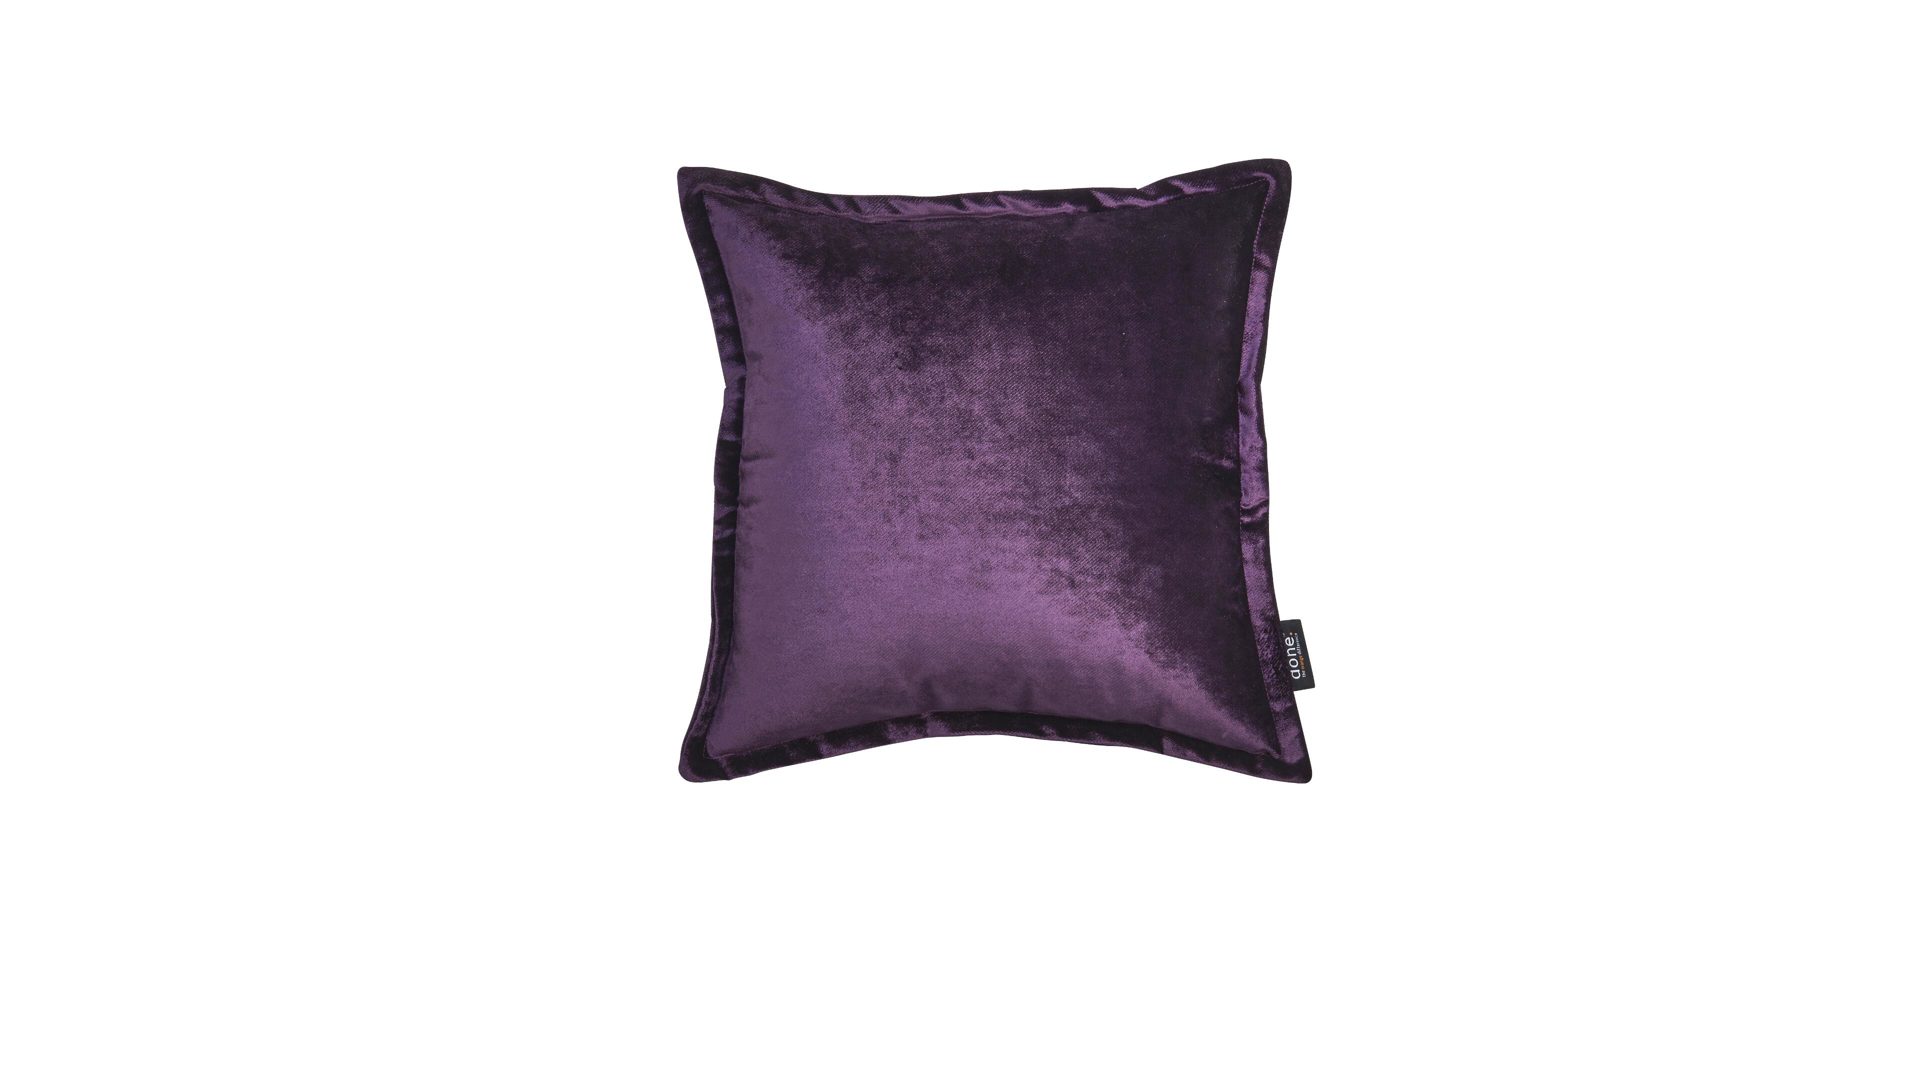 Kissenbezug /-hülle Done by karabel home company aus Stoff in Lila Done Kissenhülle Cushion Glam lilafarbener Samt – ca. 45 x 45 cm